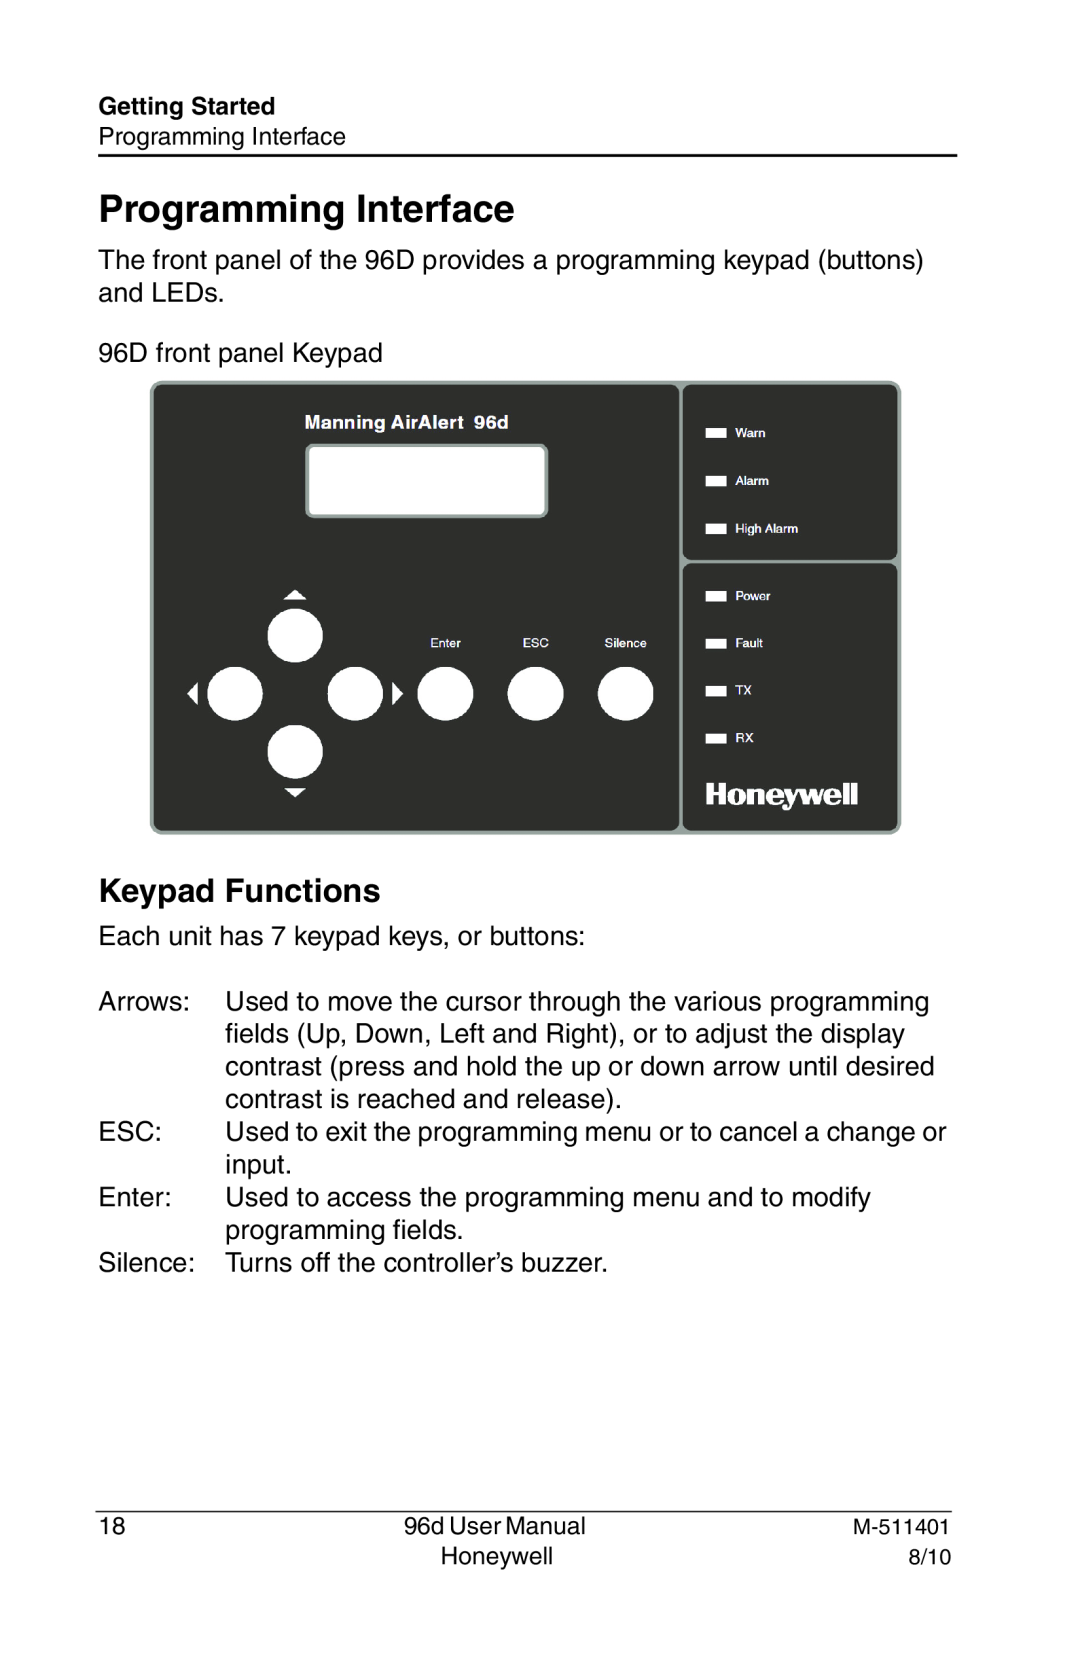 Honeywell 96D user manual Programming Interface, Keypad Functions 